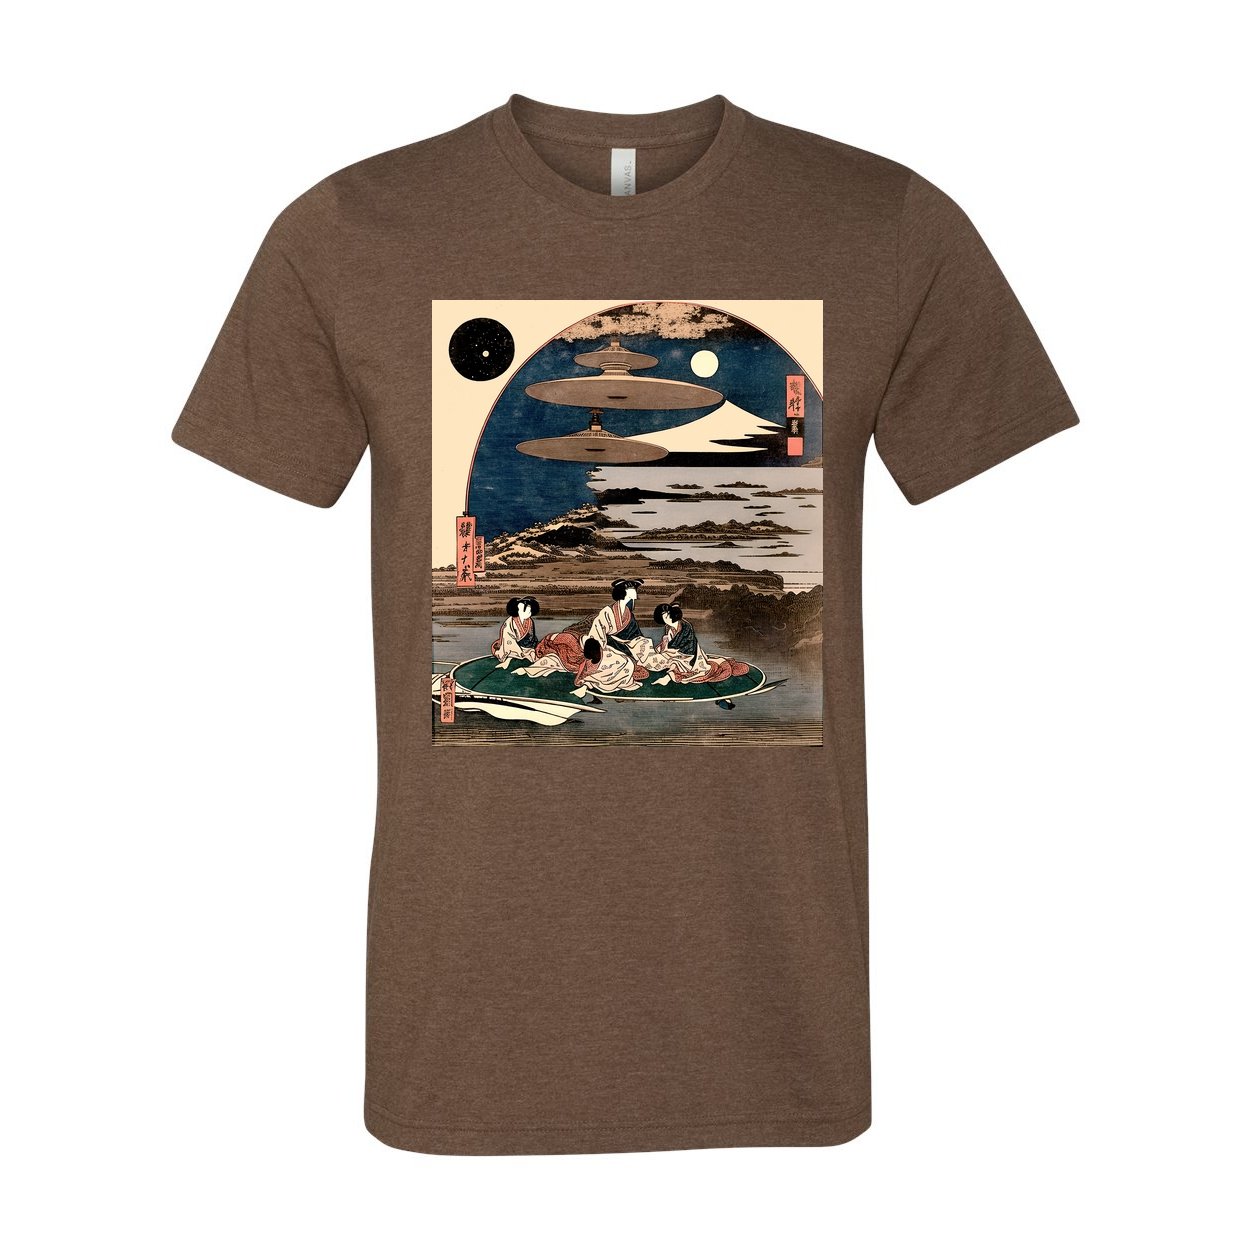 T-Shirts XS / Heather Brown UFO Space Alien Invasion | Extraterrestrial Vintage Ukiyo-e 19th-Century Surreal Graphic Art T-Shirt